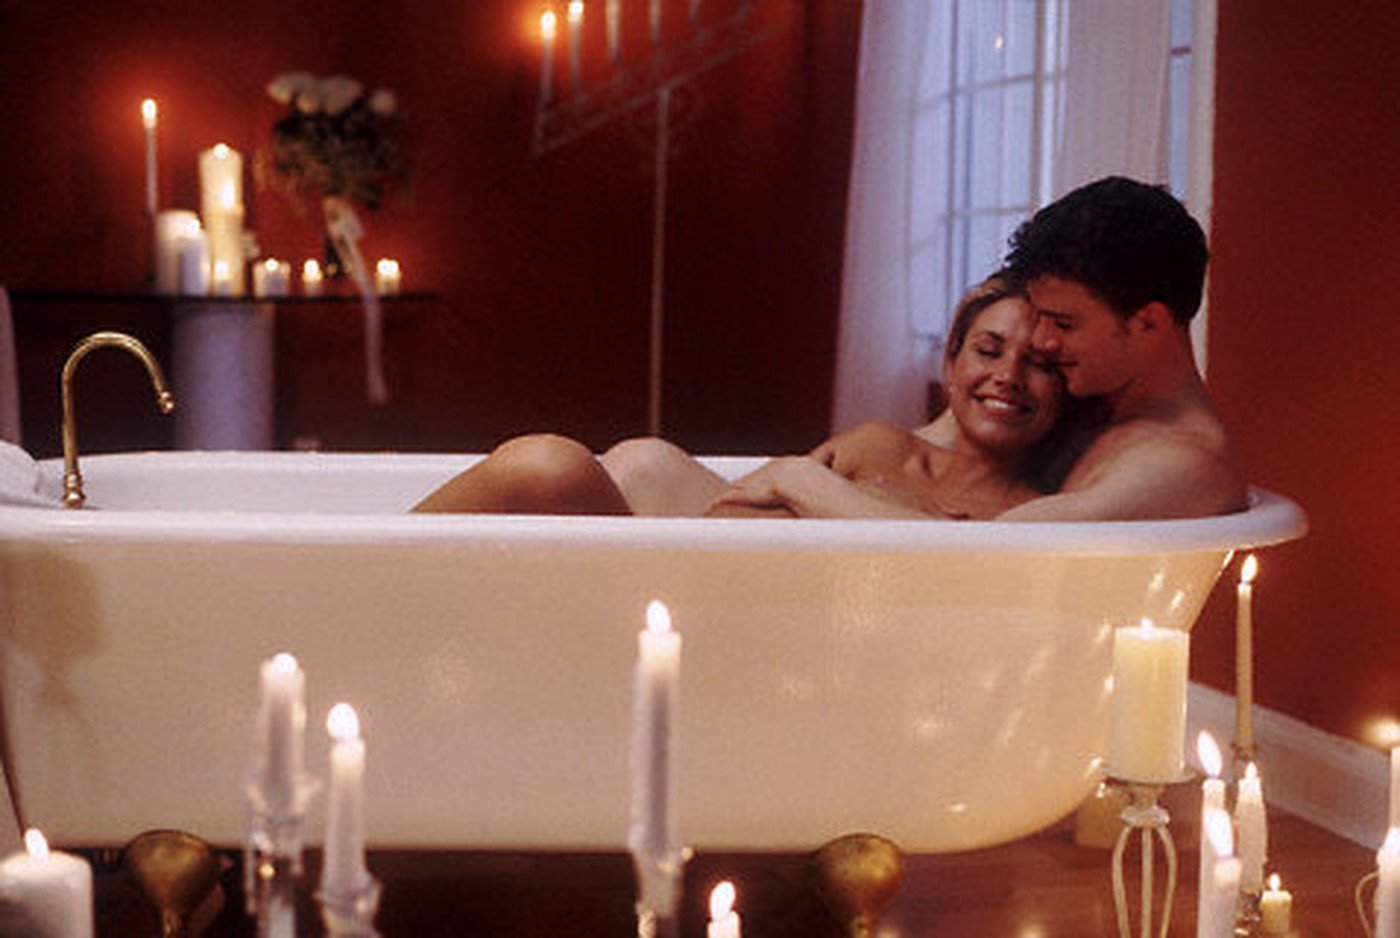 Romantic bath turns into